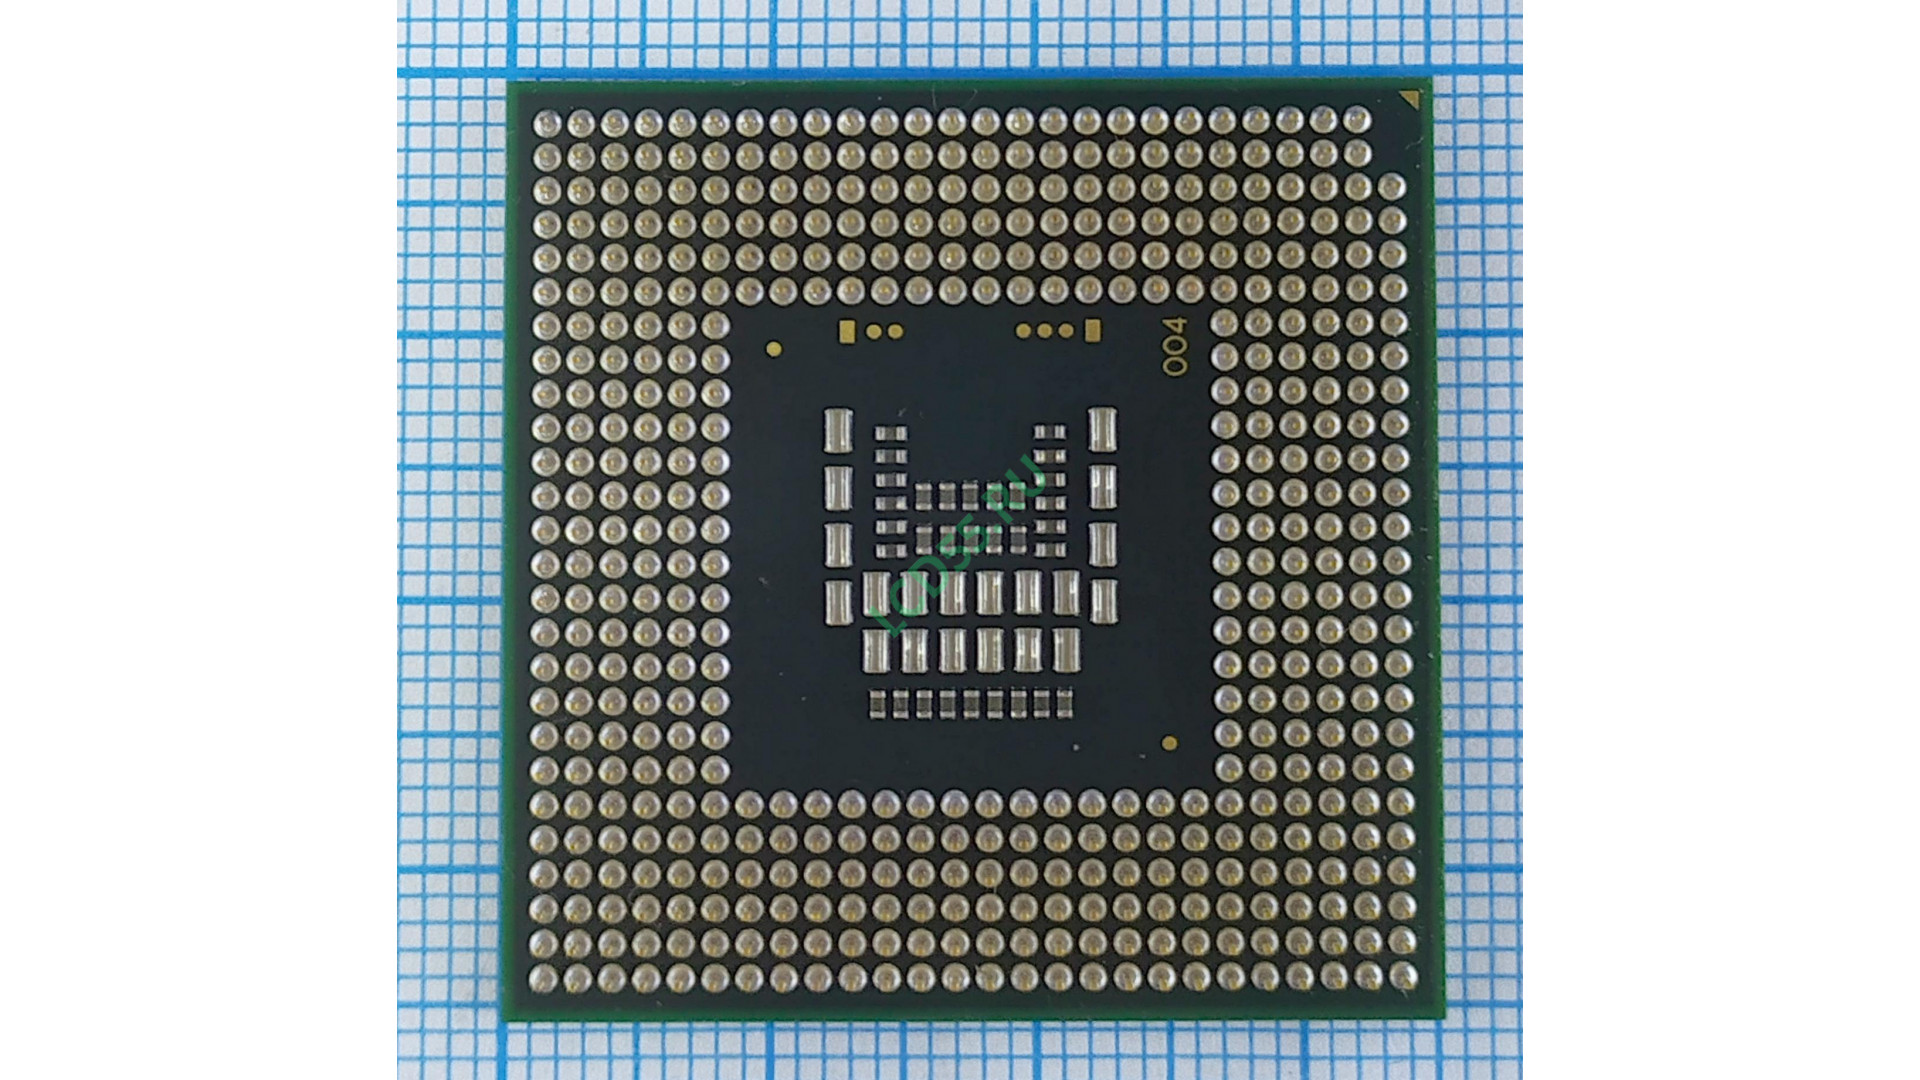 Intel Pentium Dual-Core Mobile T4400 SLGJL 2.2 GHz